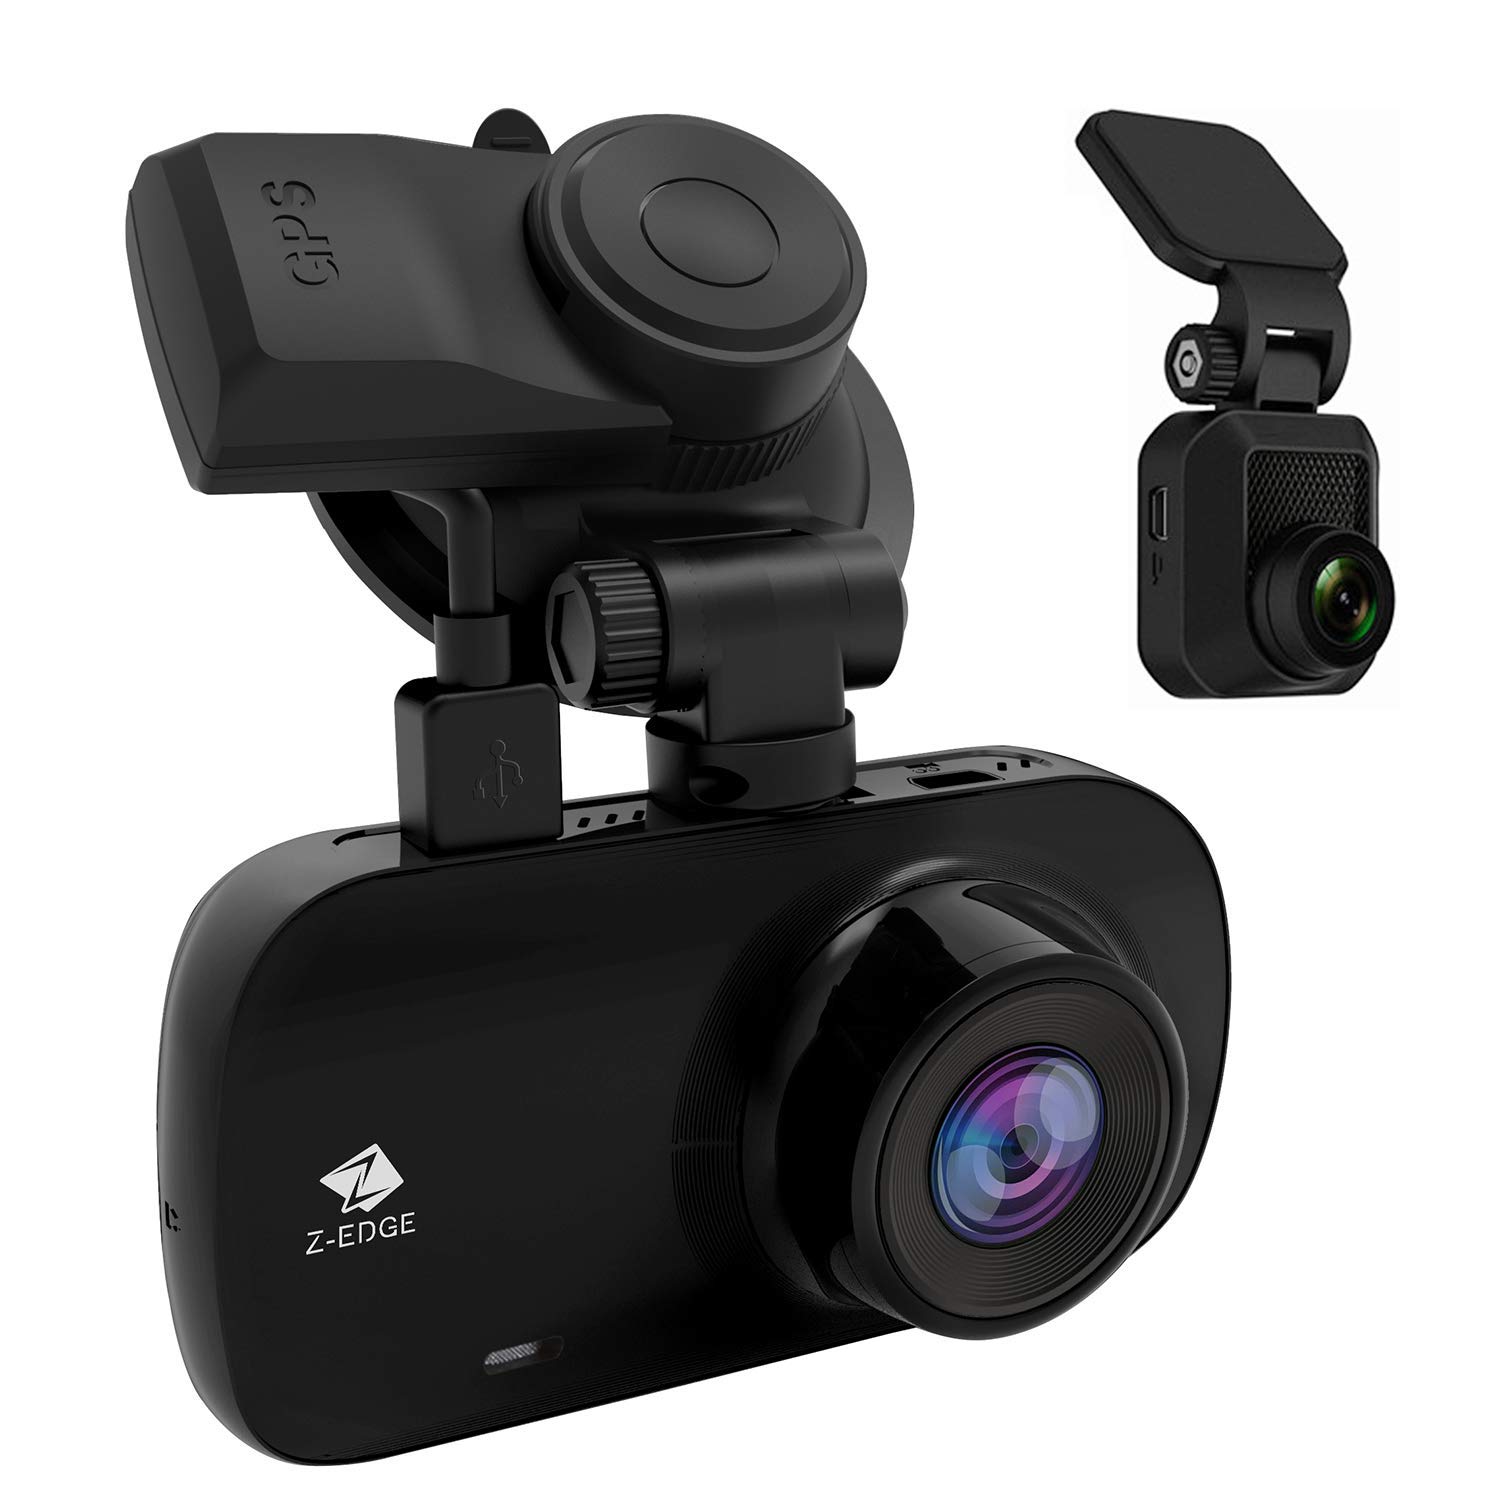 Z-Edge GPS WiFi Dashcam Dual Autokamera Frontkamera 2K & Heckkamera Full HD 1080P 2,7 Zoll LCD Bildschirm, 155° Weitwinkelobjektiv, Loop-Aufnahme, WDR, G-Sensor, Parküberwachung [2023 Upgrade Version]